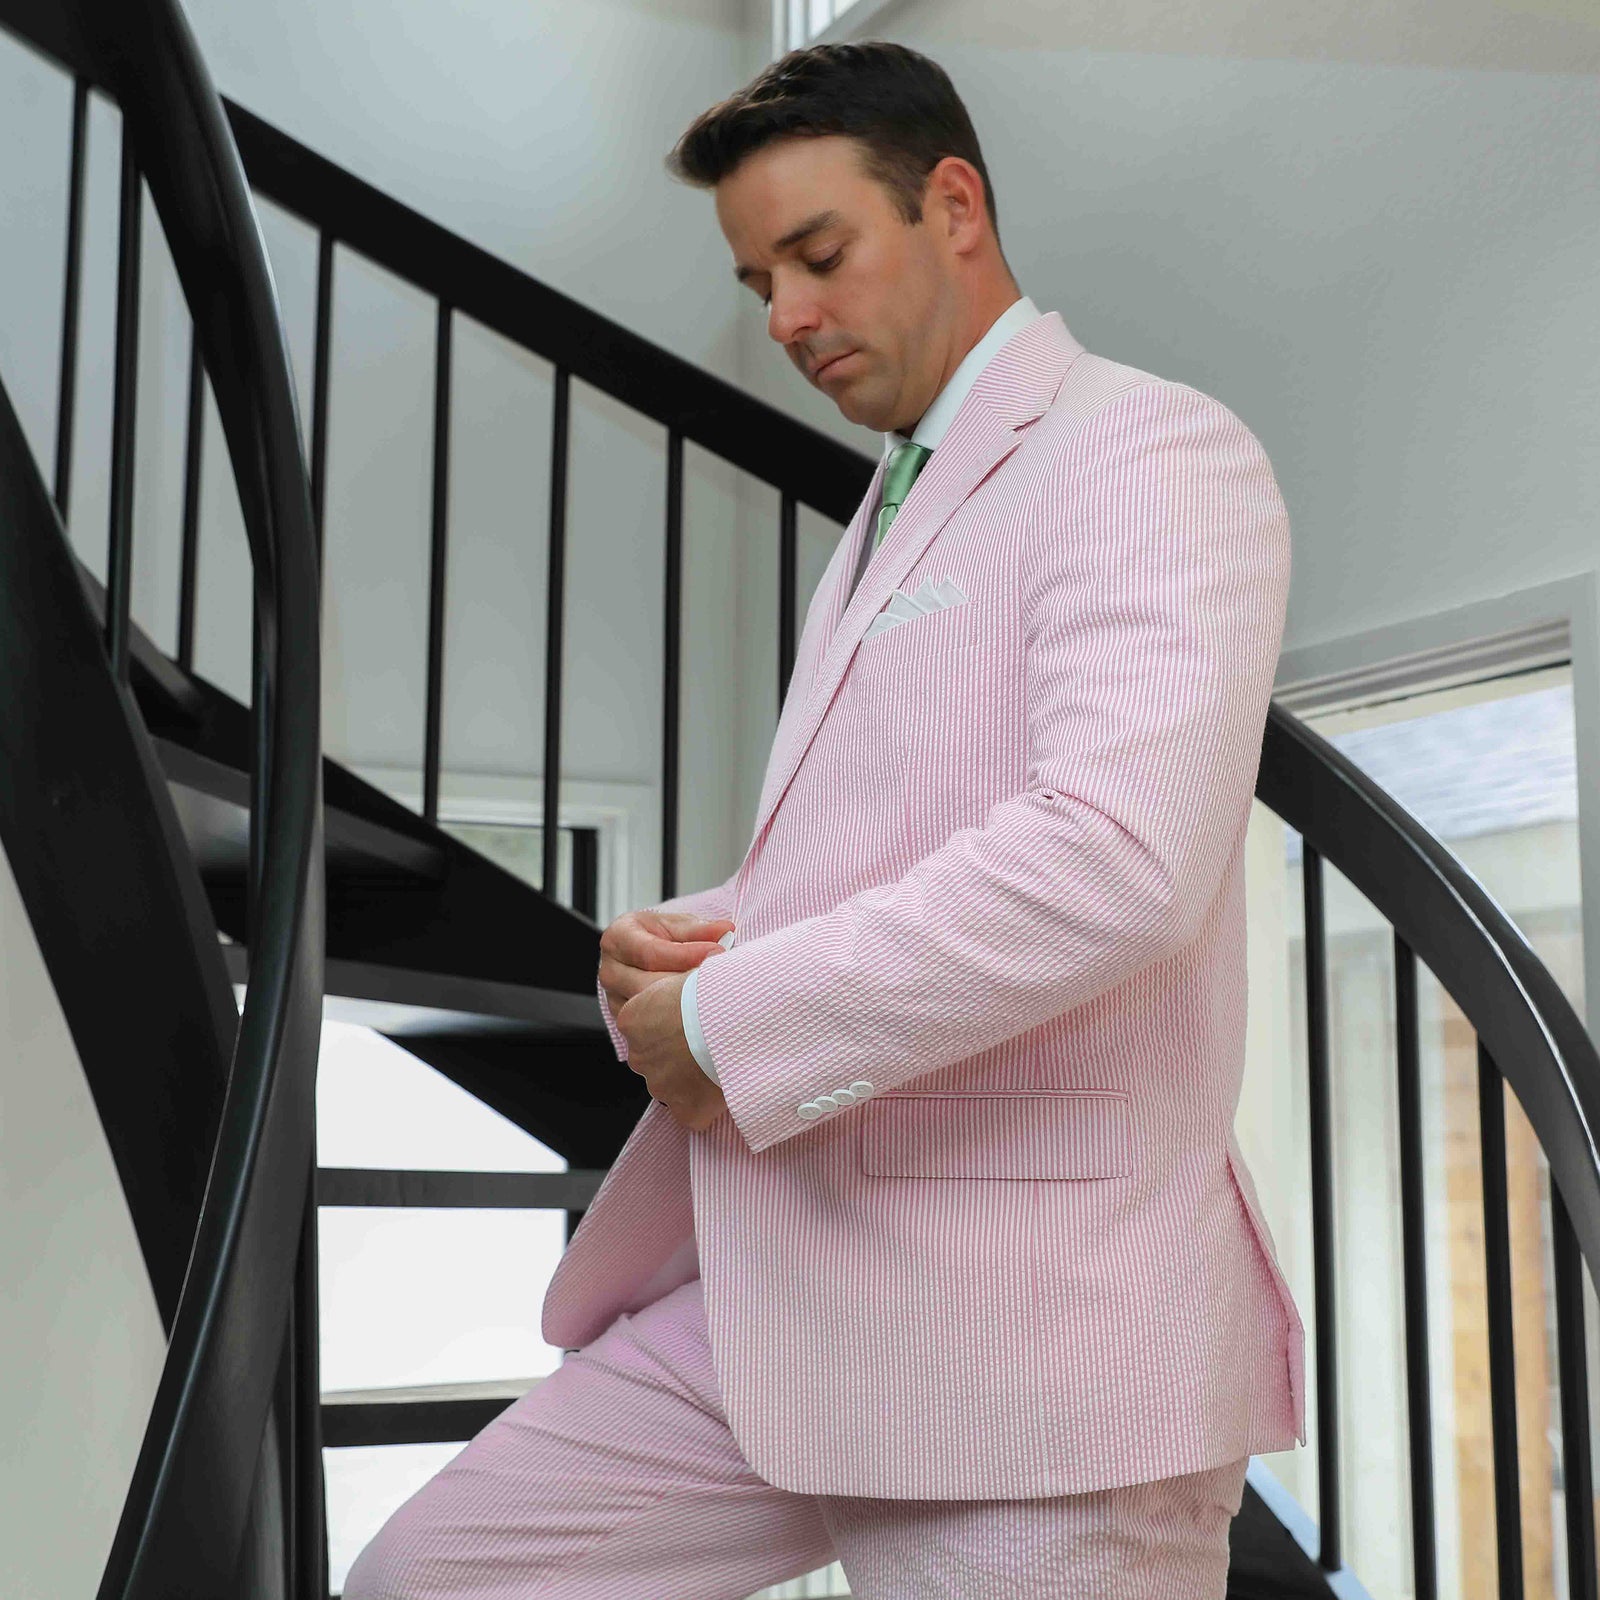 Believe It Blazer Pant Set - Pink